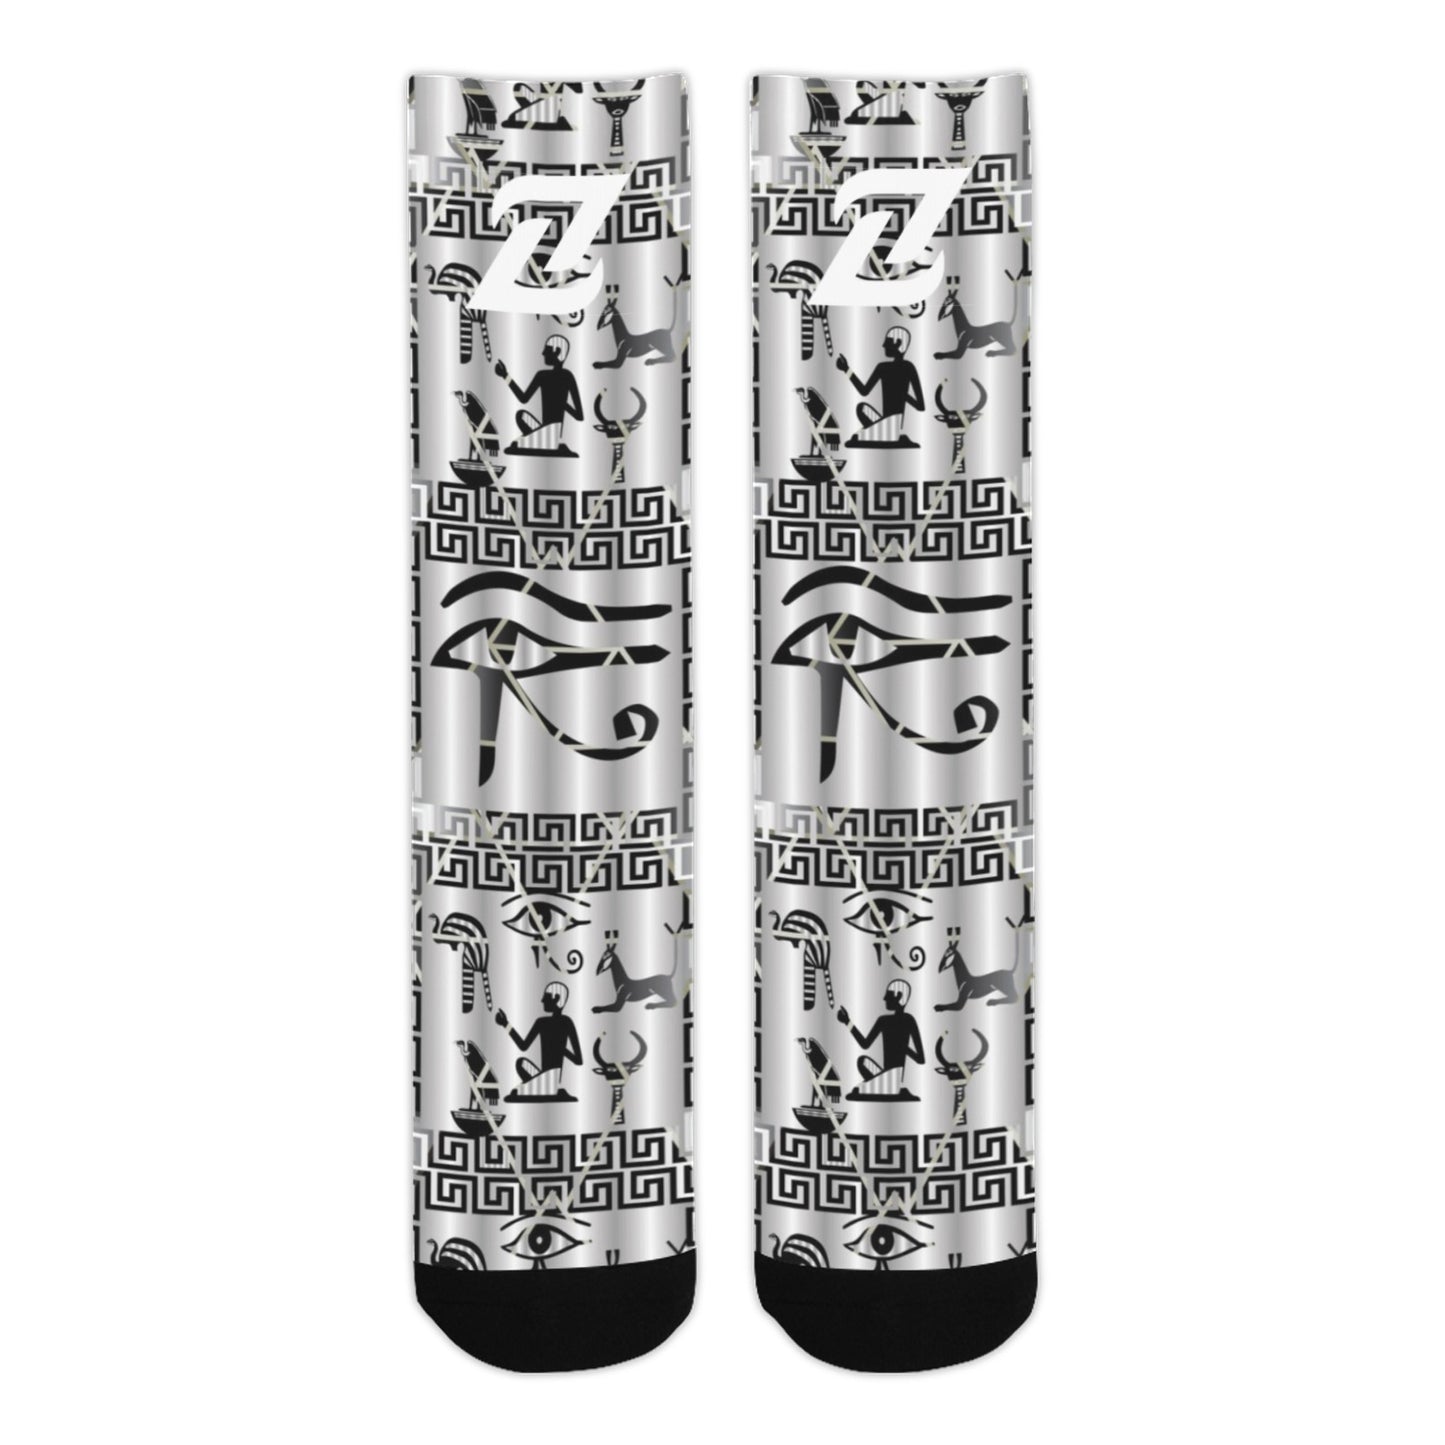 Zen Socks - All seeing eye